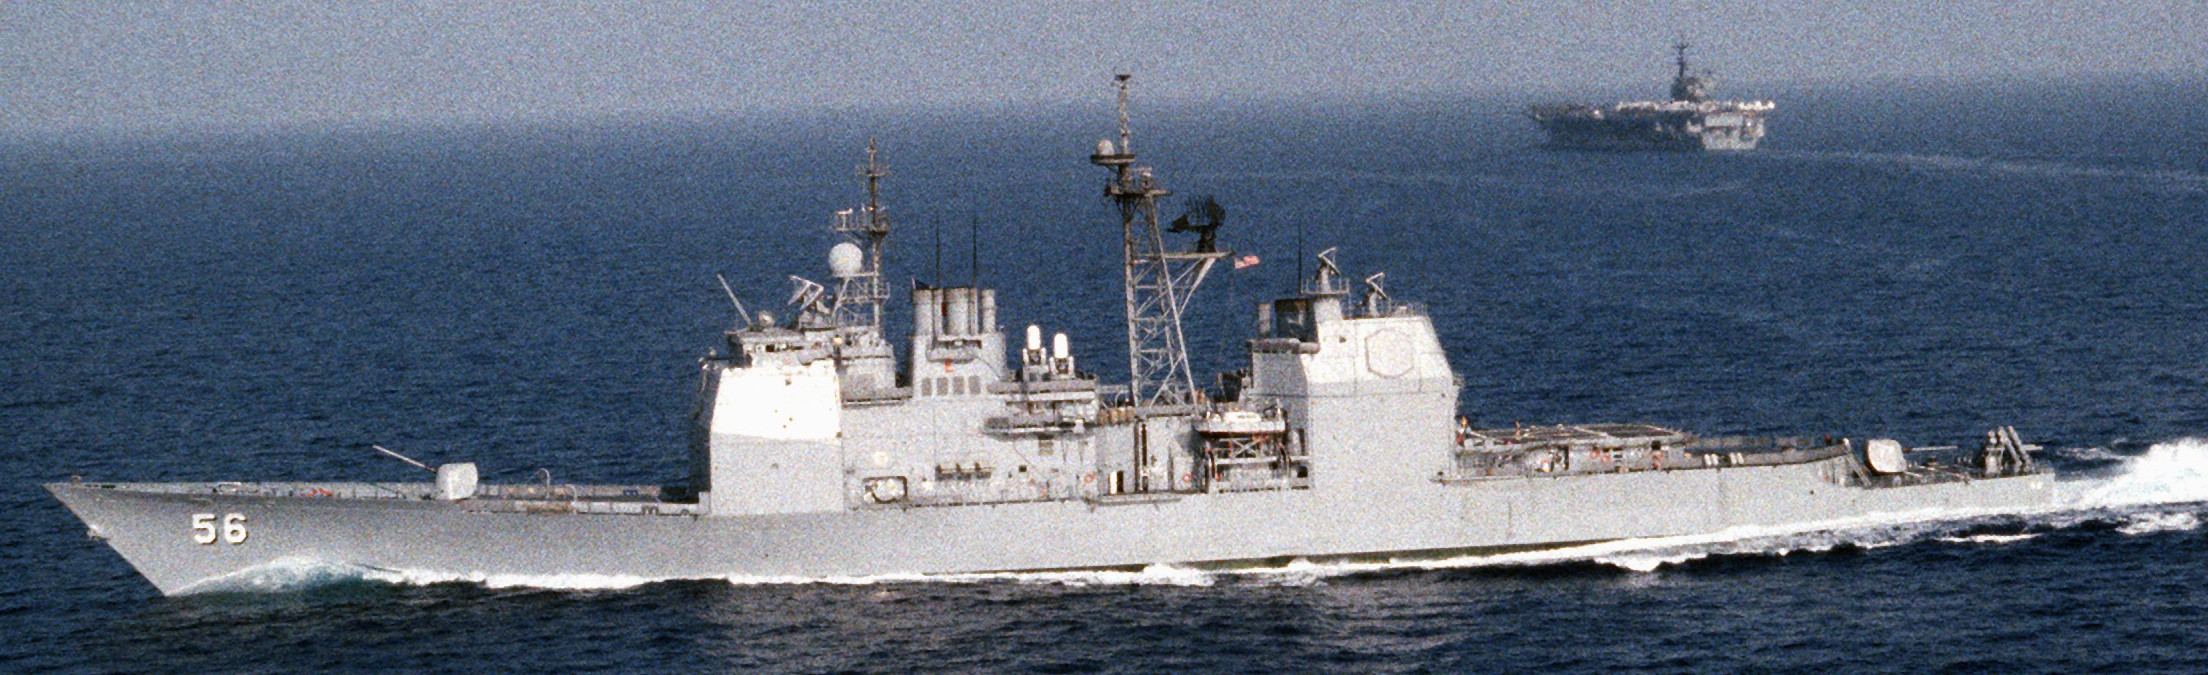 cg-56 uss san jacinto ticonderoga class guided missile cruiser aegis us navy operation desert shield 1990